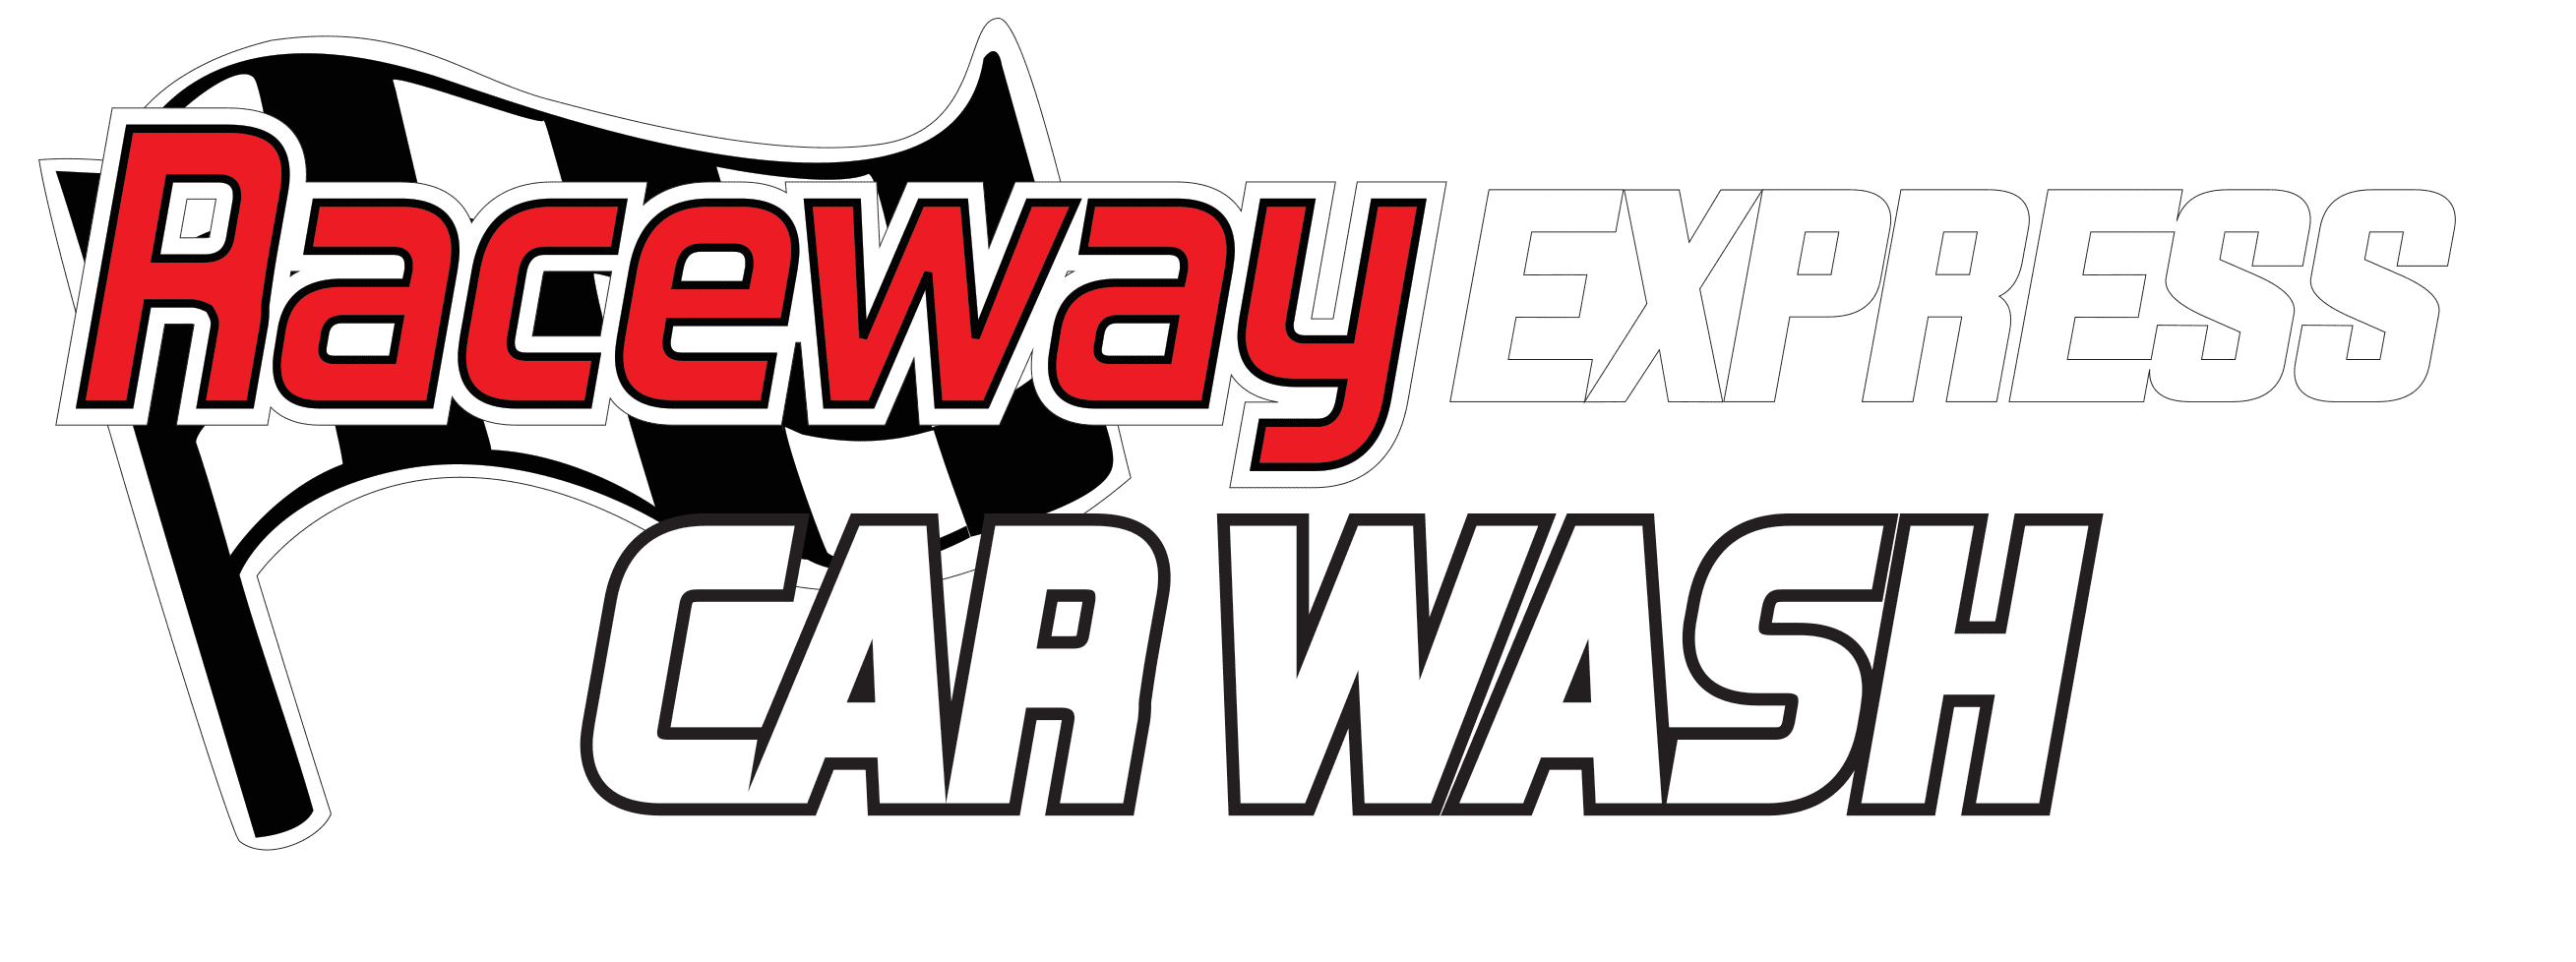 Raceway Express Carwash